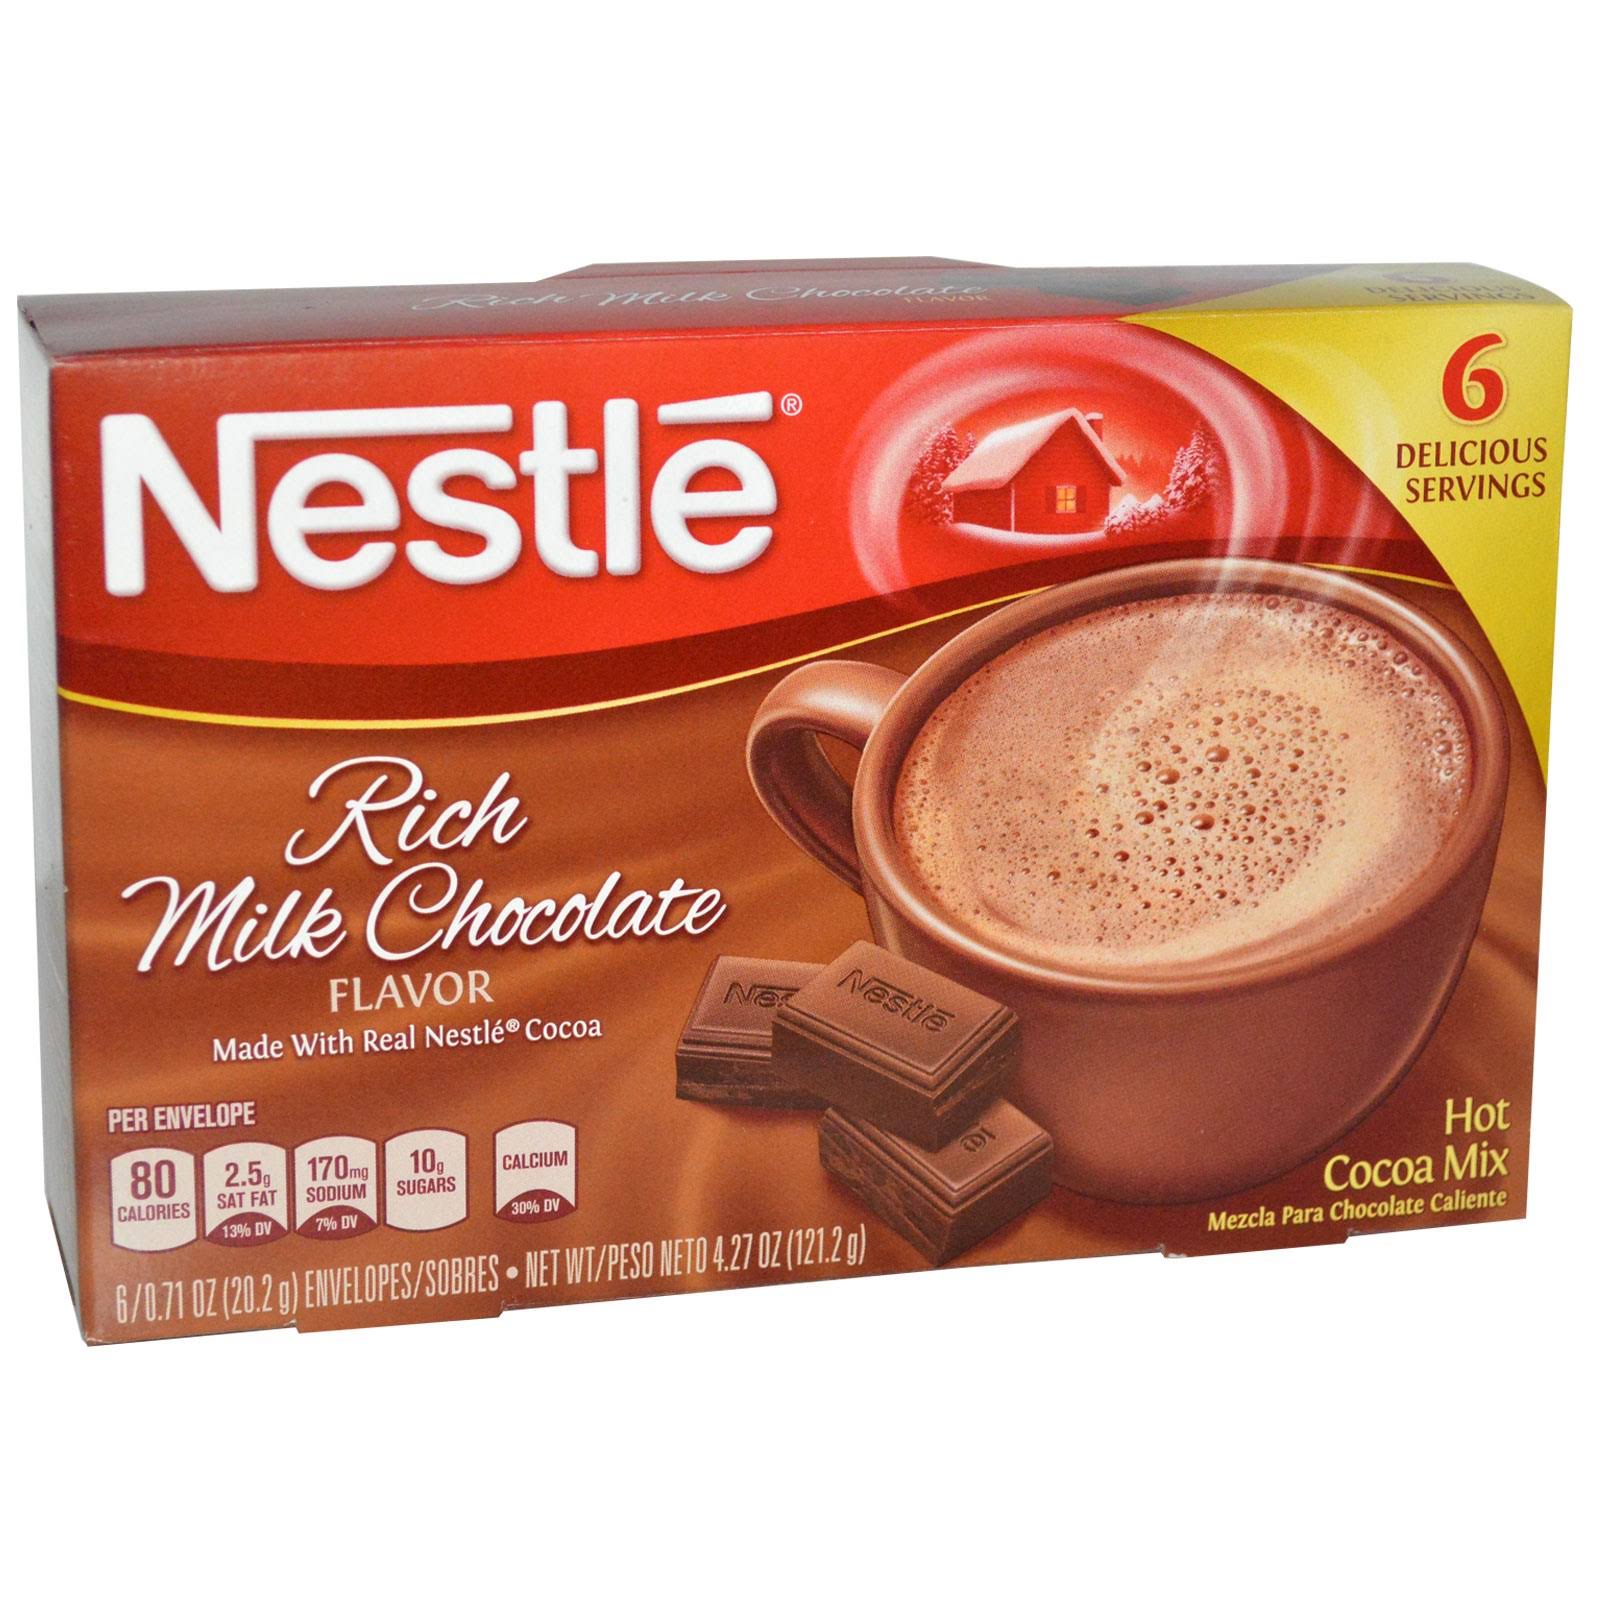 Nestle Hot Cocoa Mix - Rich Milk Chocolate, 6ct